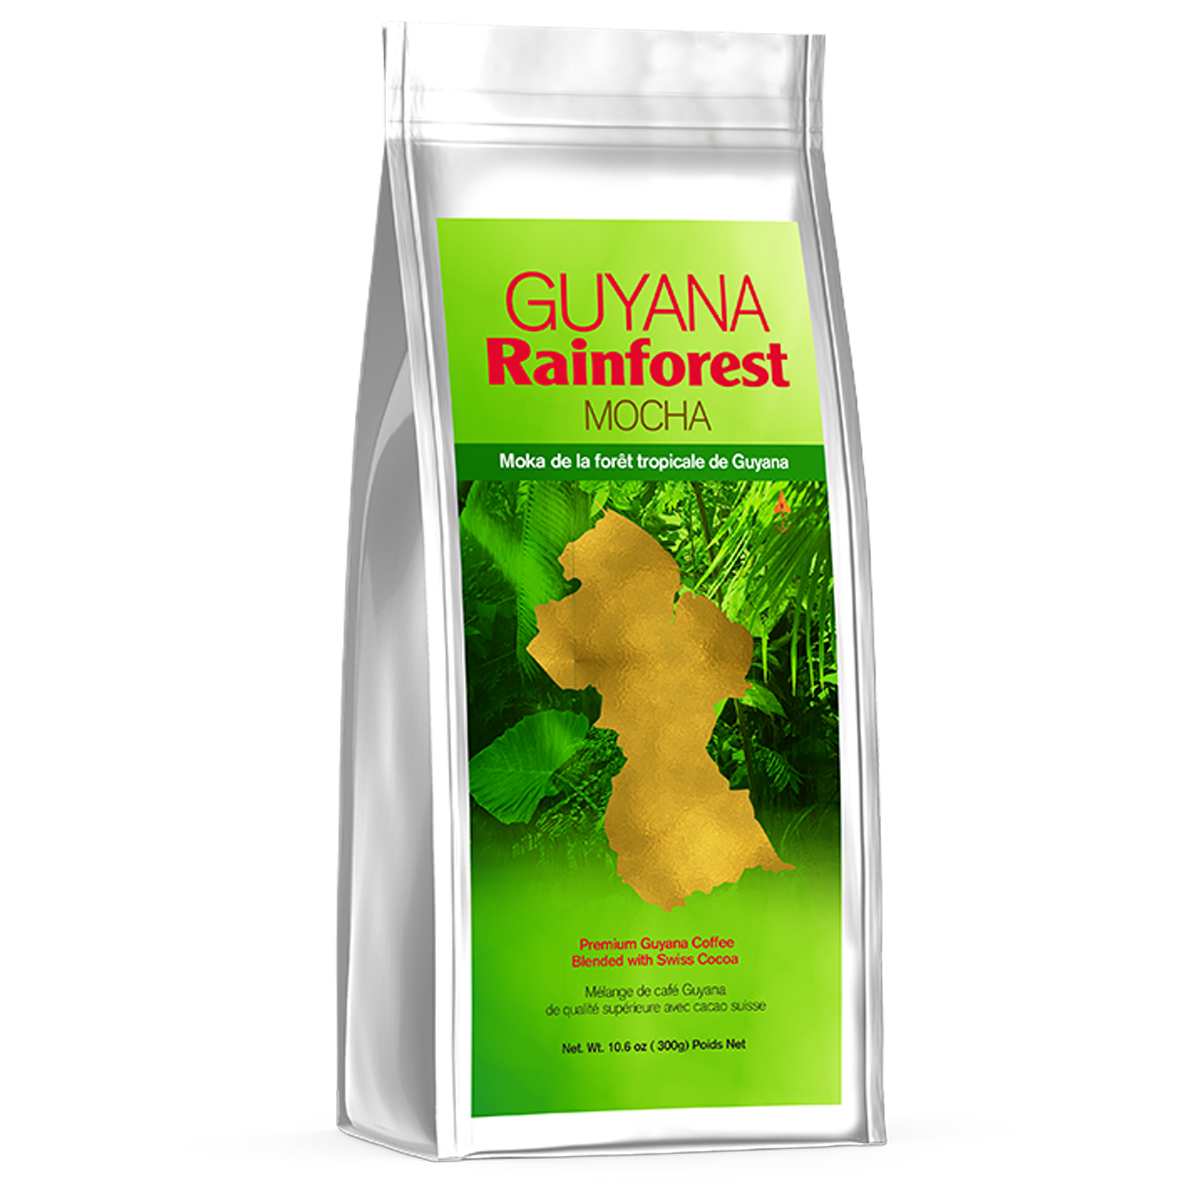 Guyana Rainforest Mocha